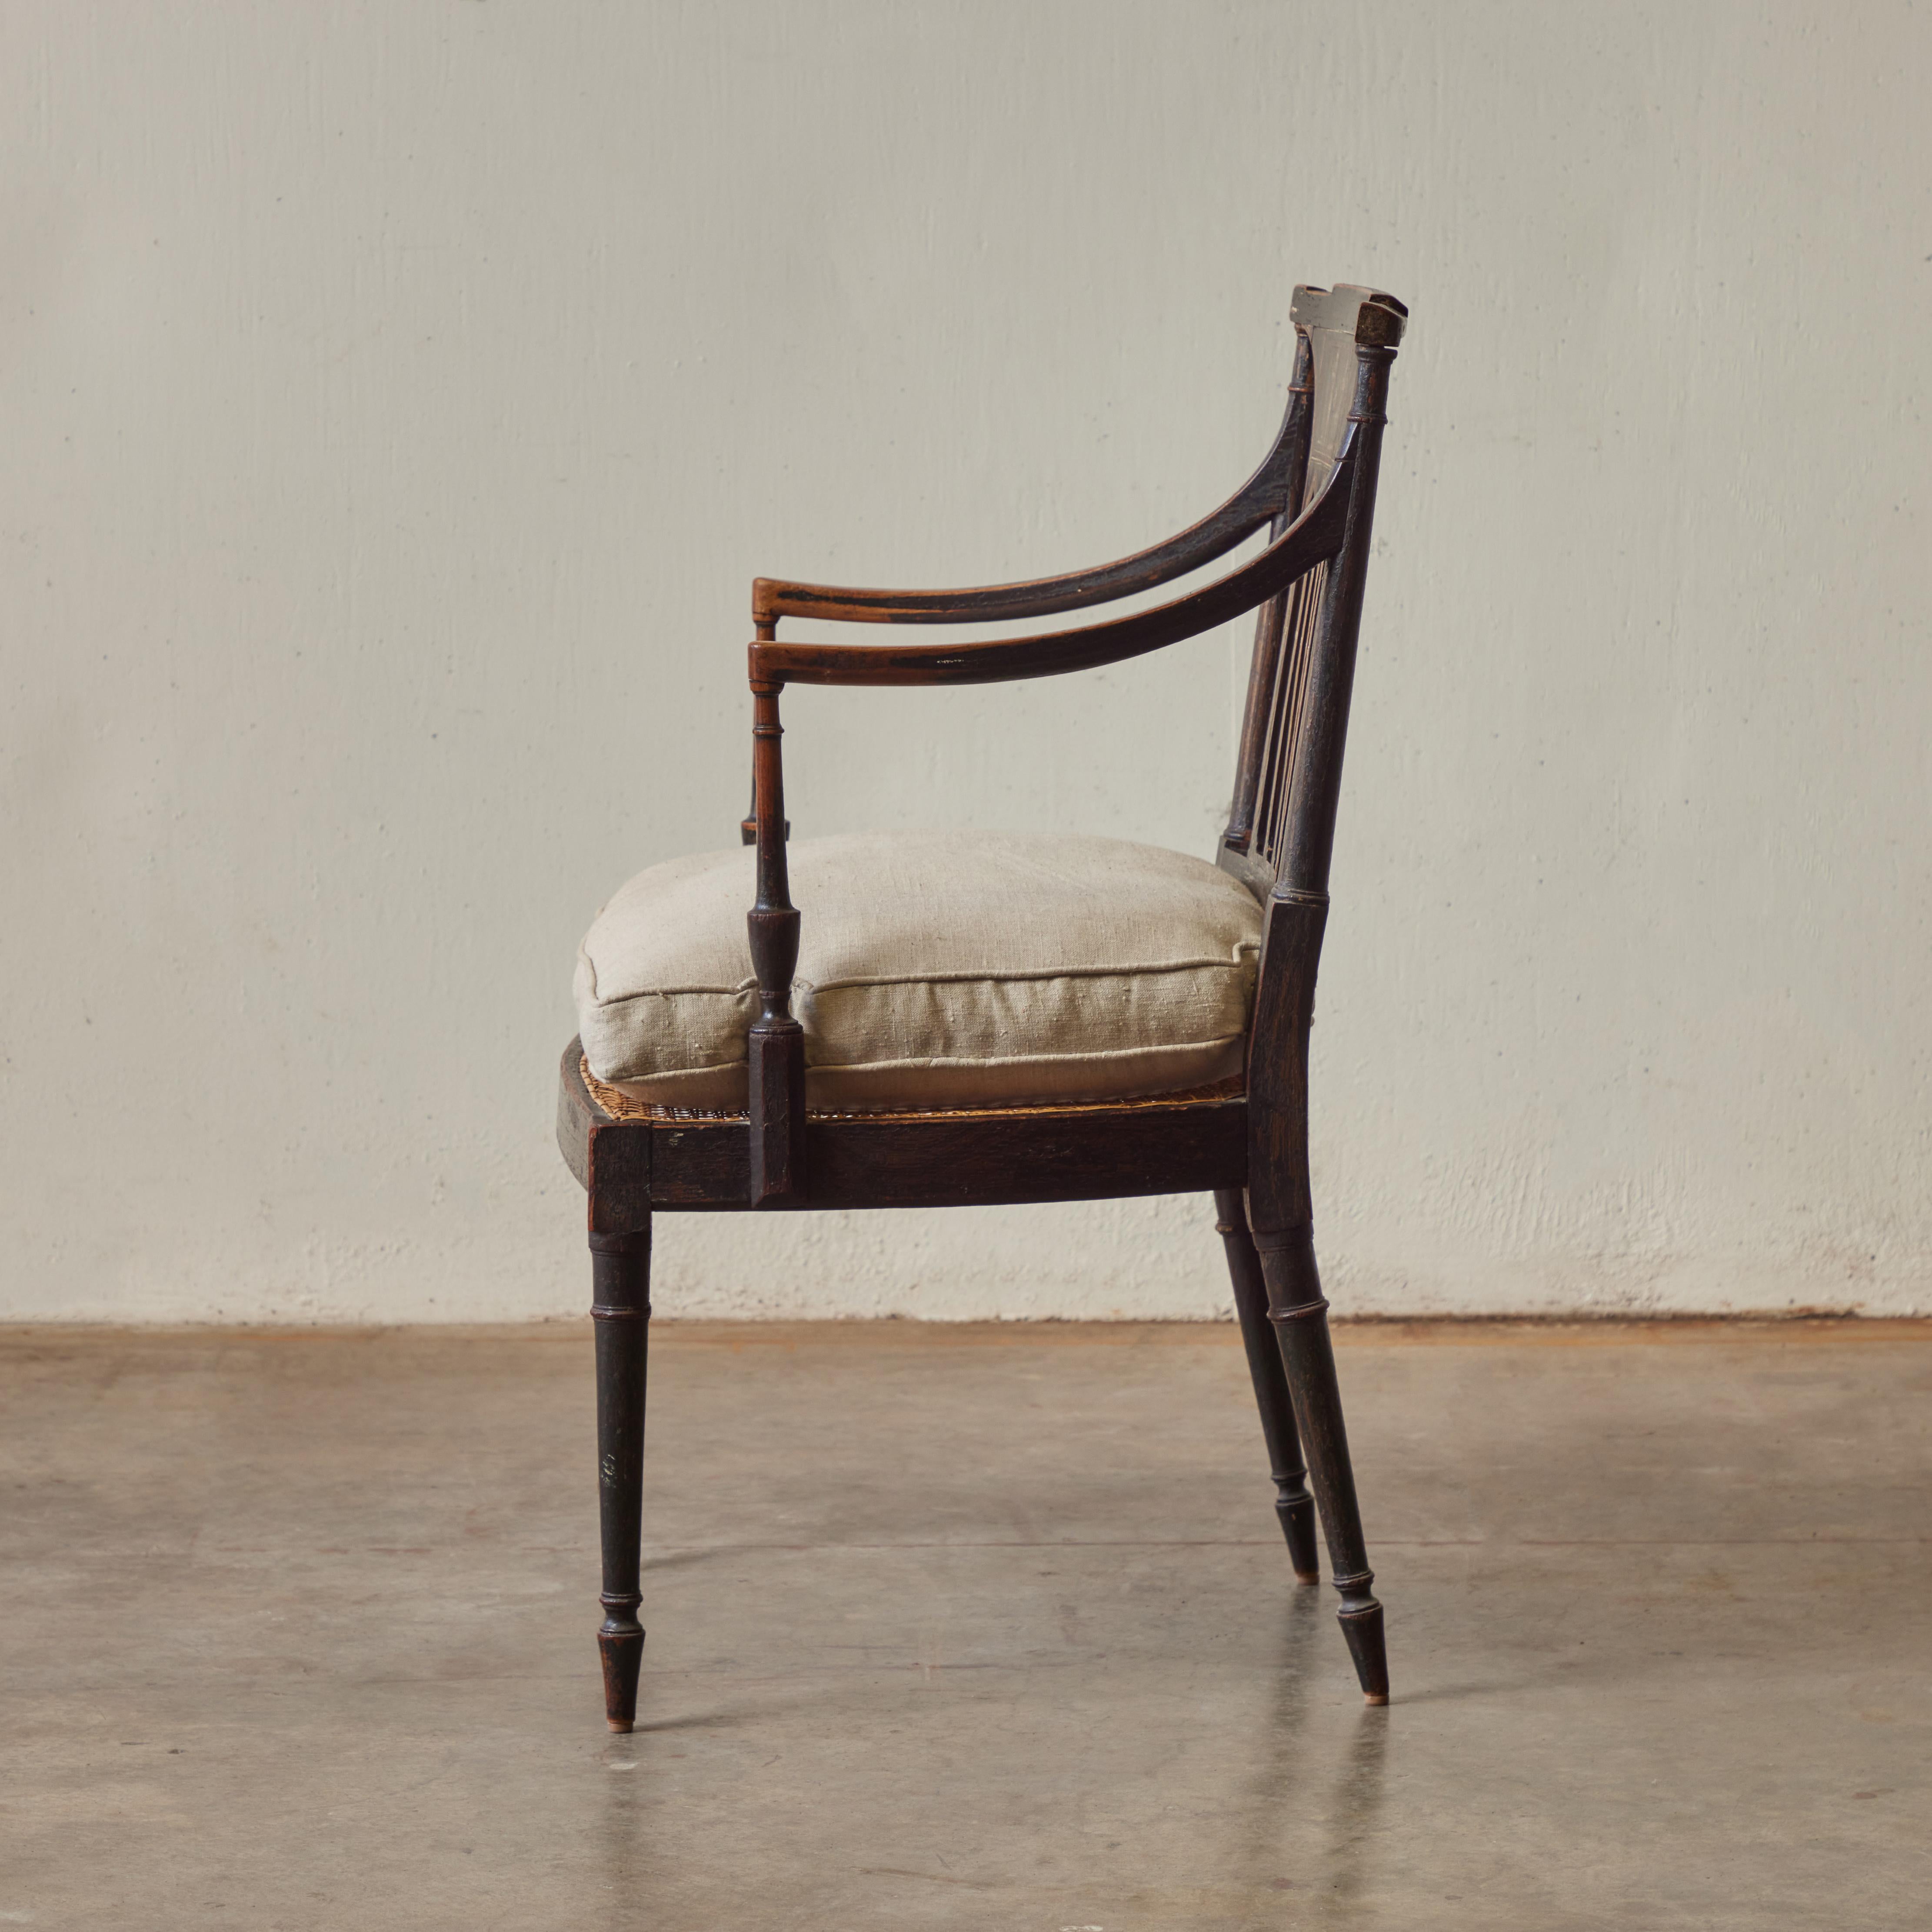 Early 19th Century 19th Century English Regency Arm Chair